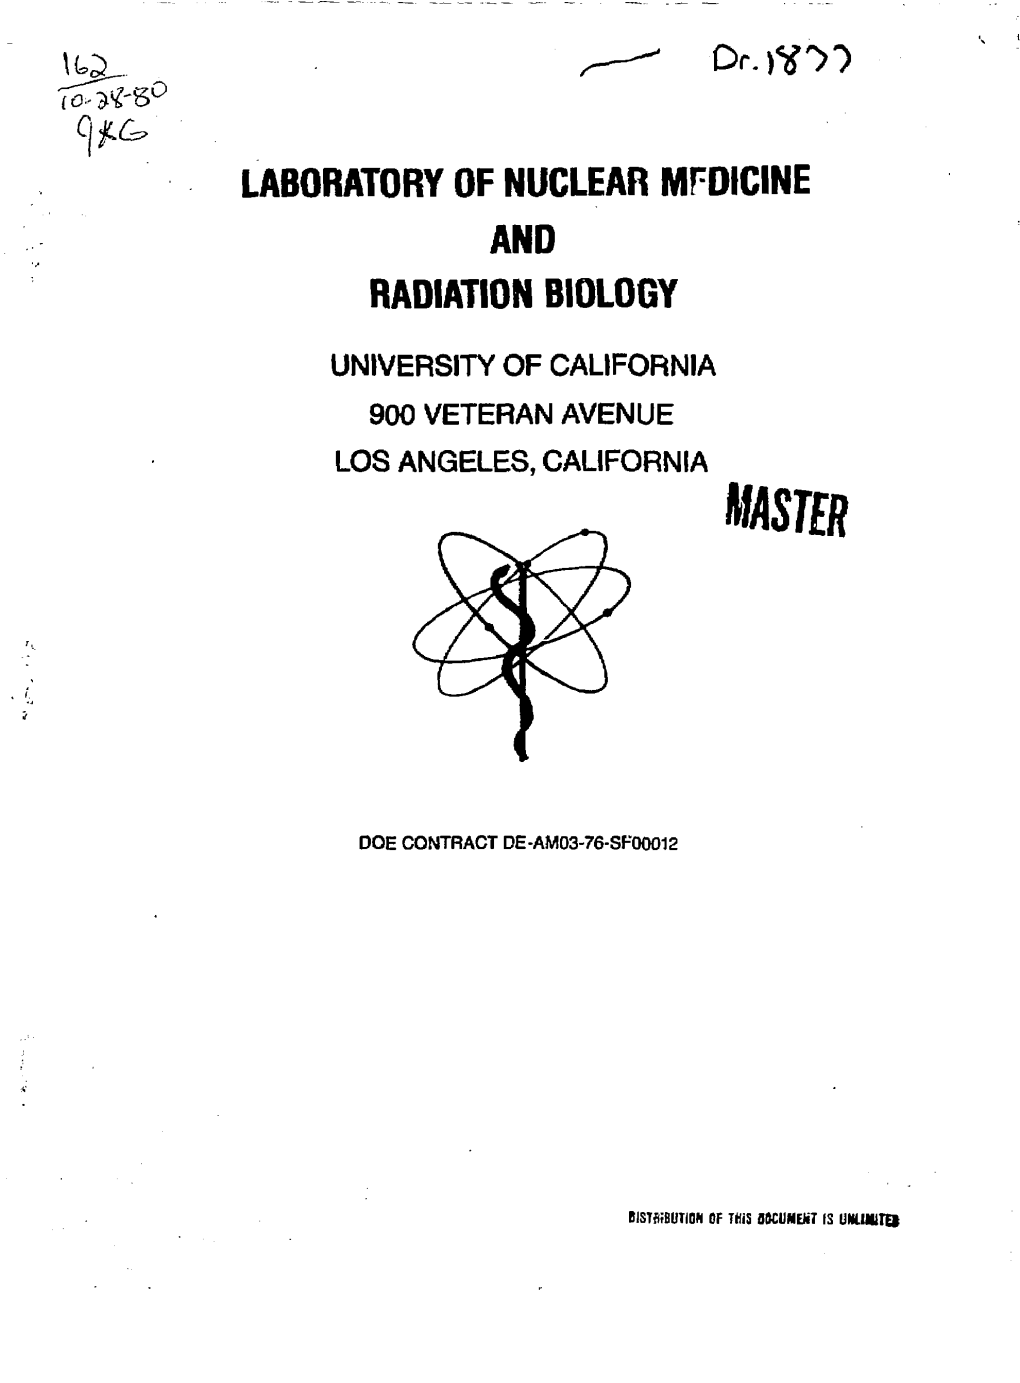 Dr.Flo') LABORATORY of NUCLEAR MFDICINE and RADIATION